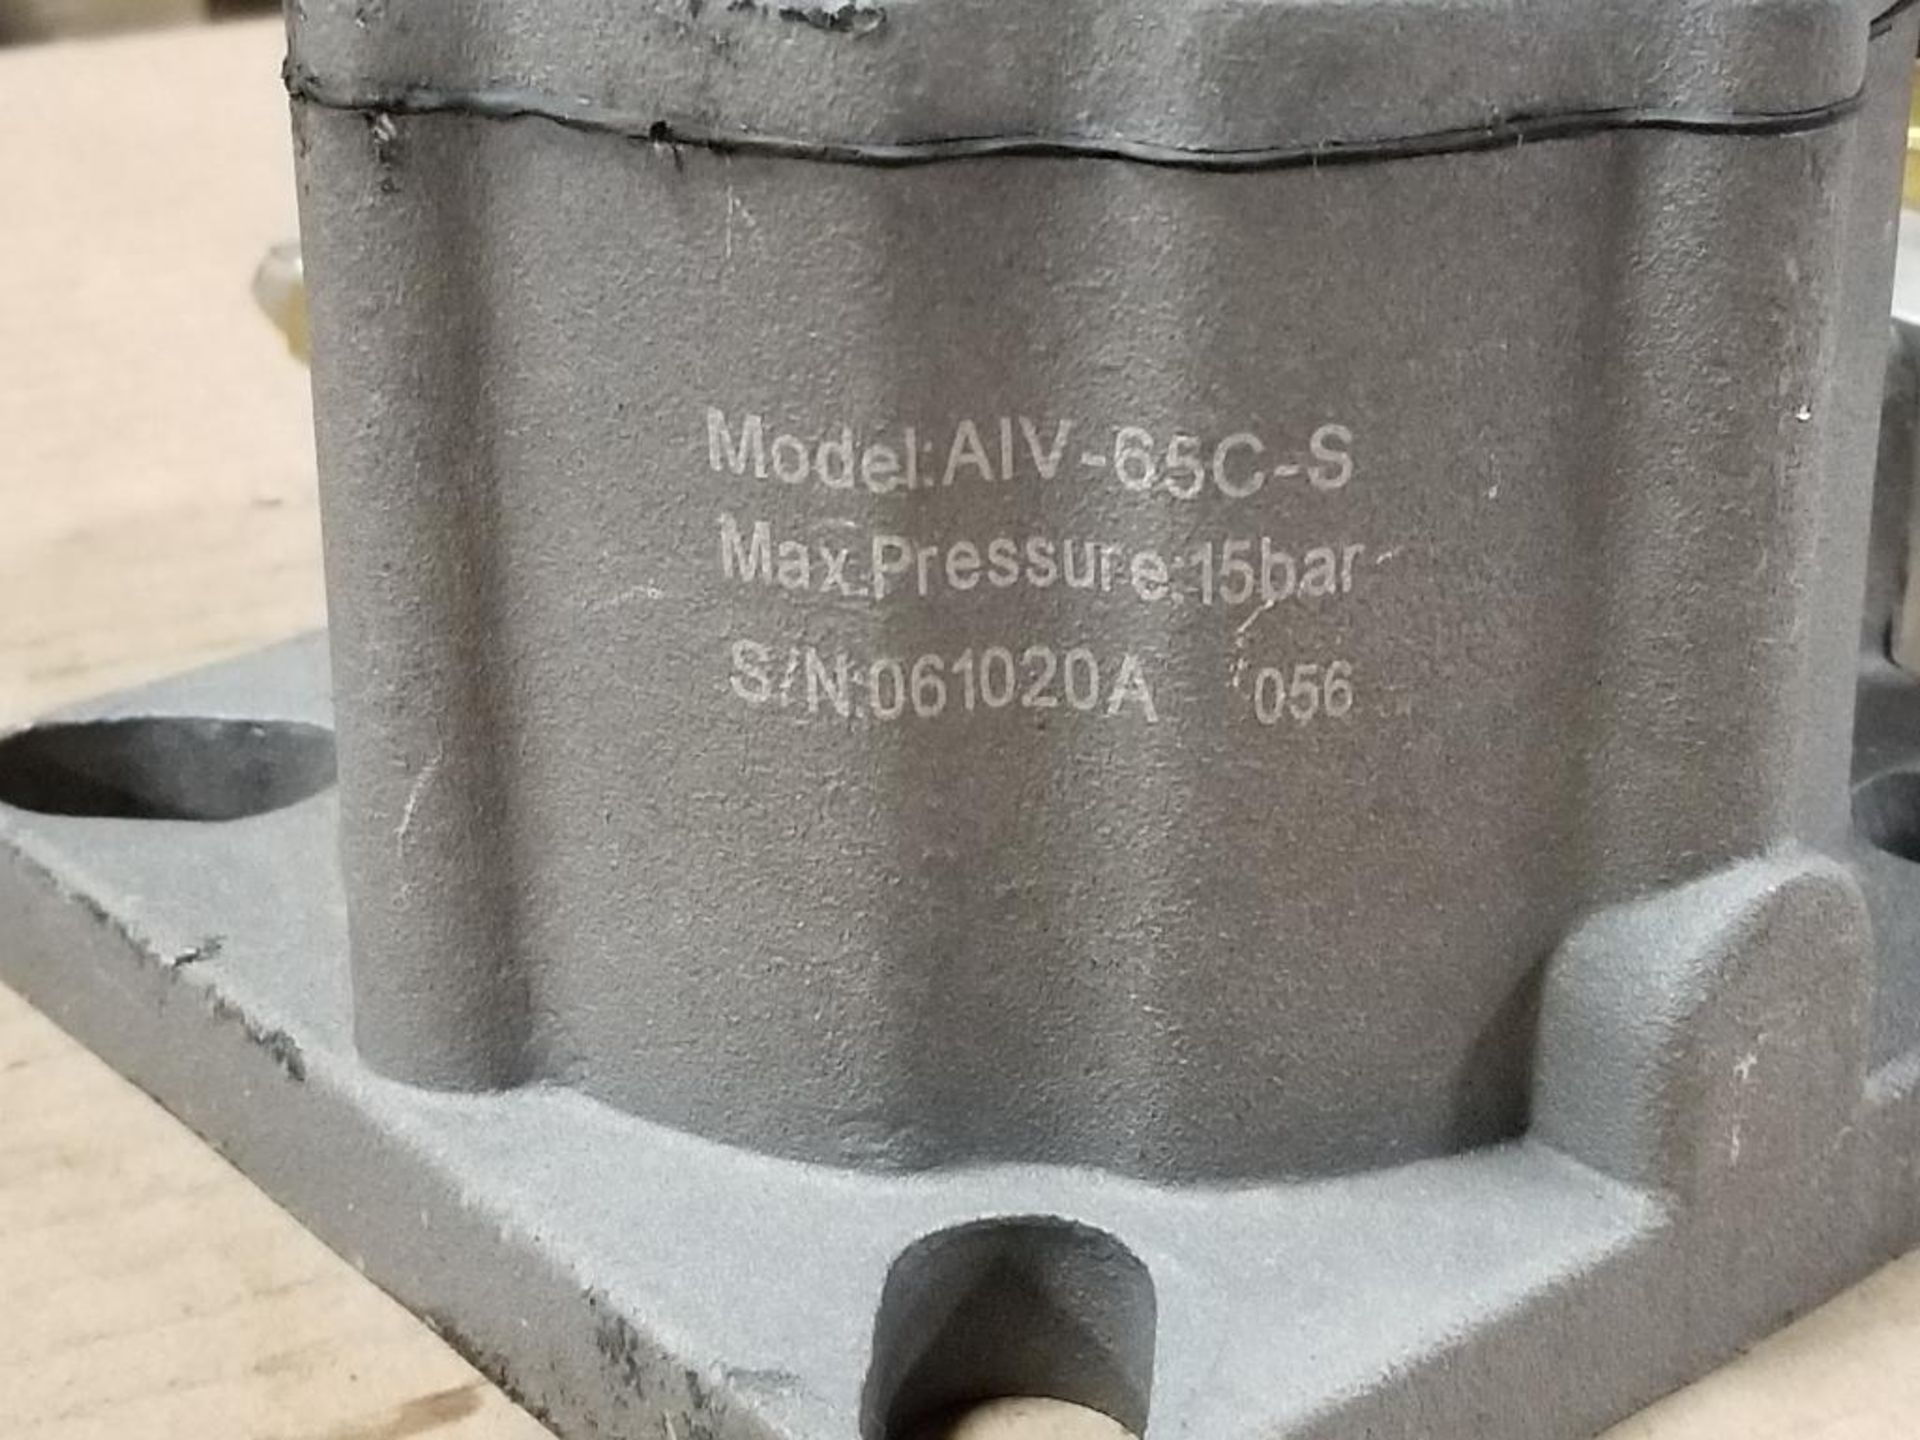 AIV-65C-S Intake valve. Max pressure - 15BAR. New no box. - Image 3 of 6